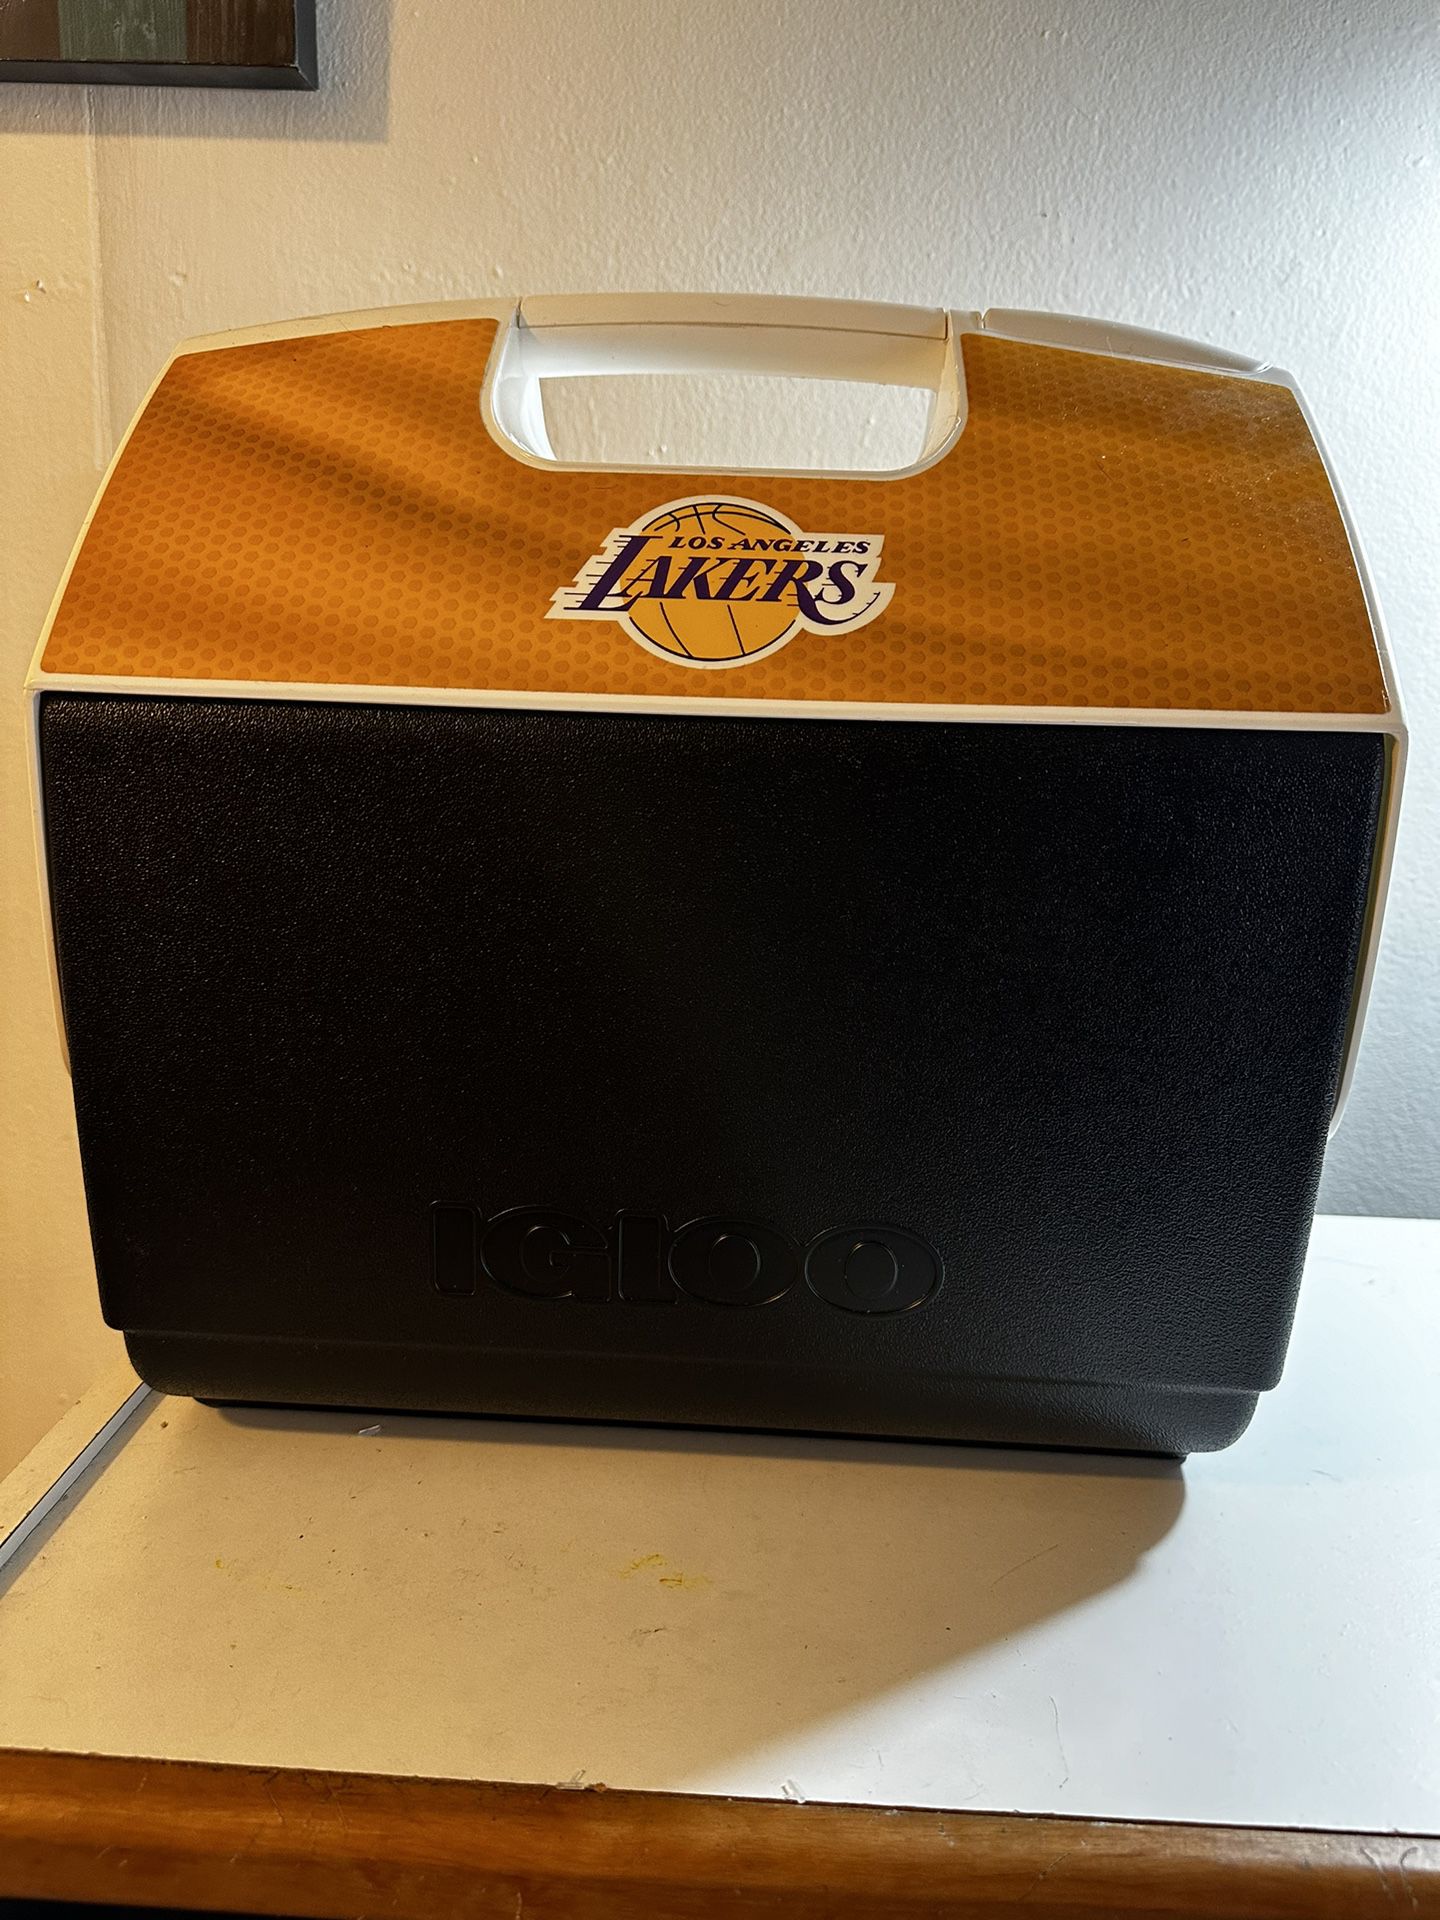 Lakers Igloo Cooler